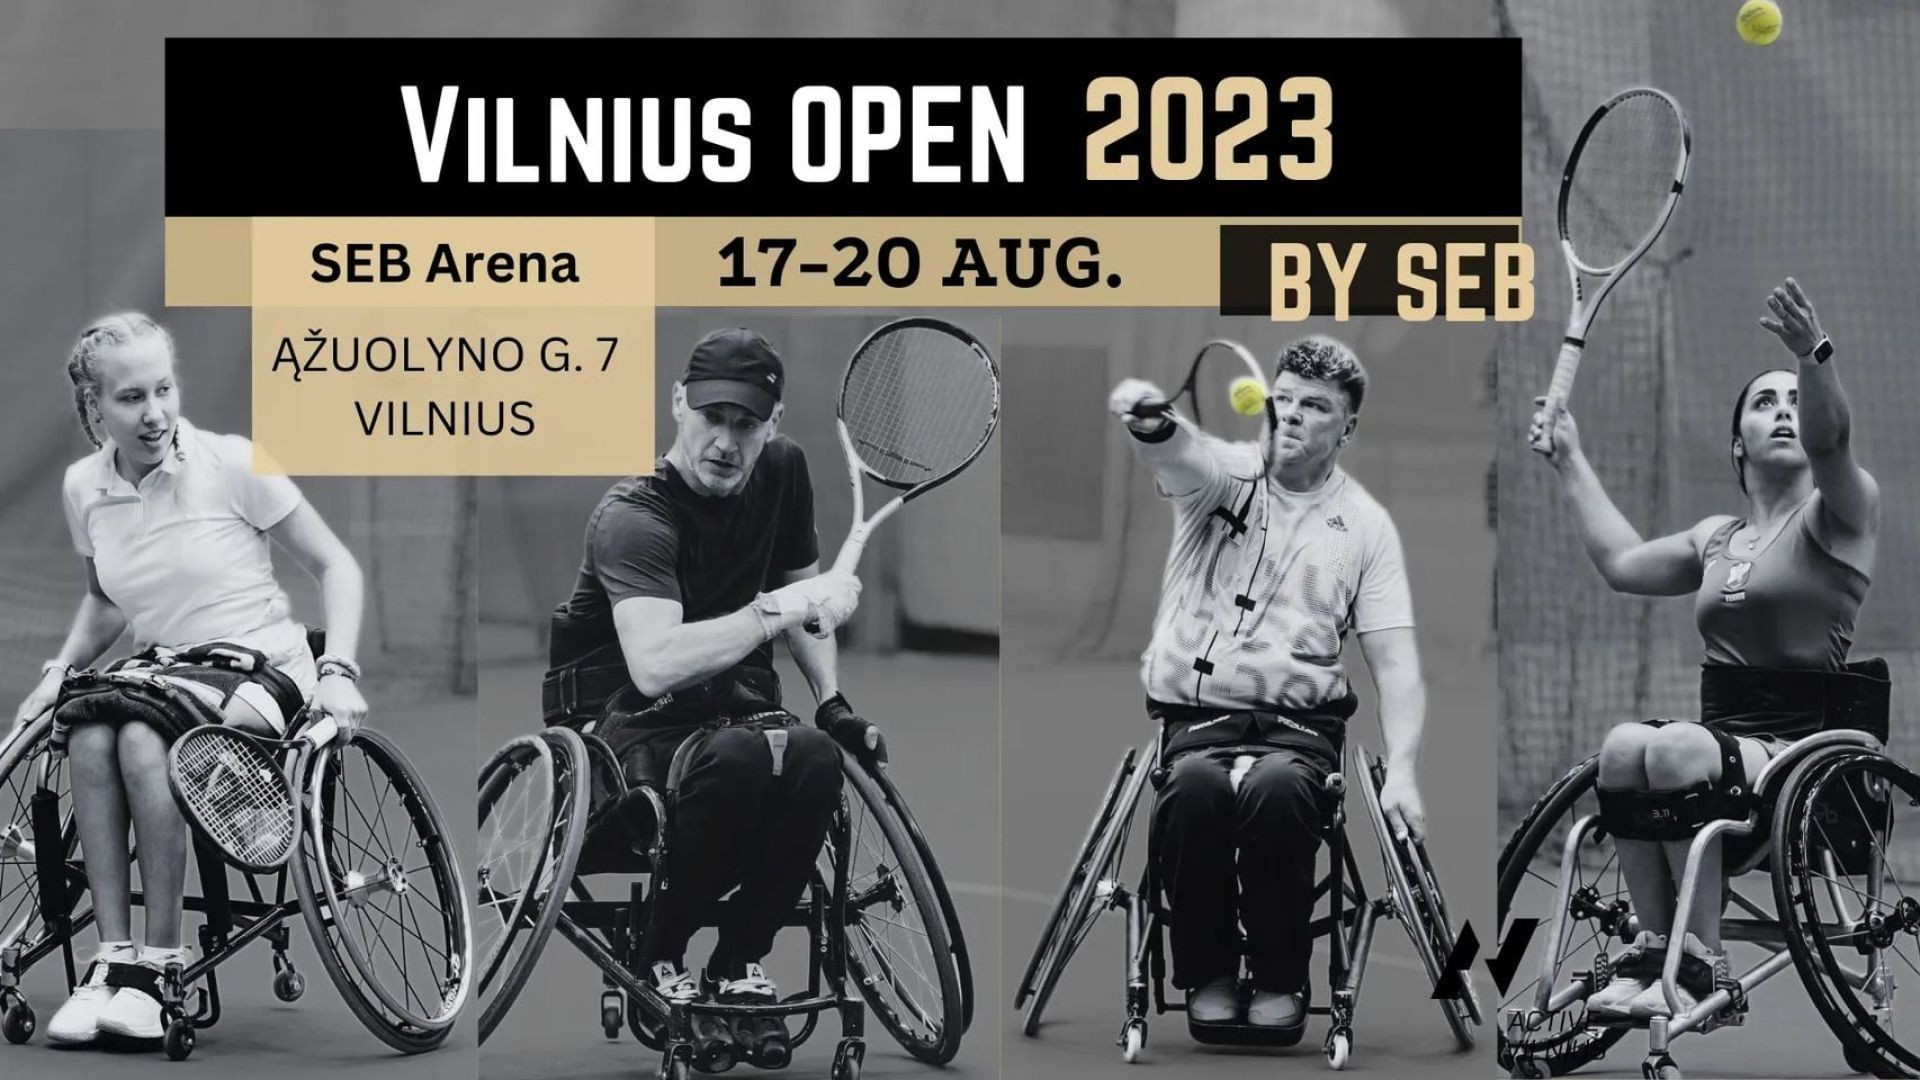 COURT 6 DAY 4 - VILNIIUS OPEN 2023 BY SEB